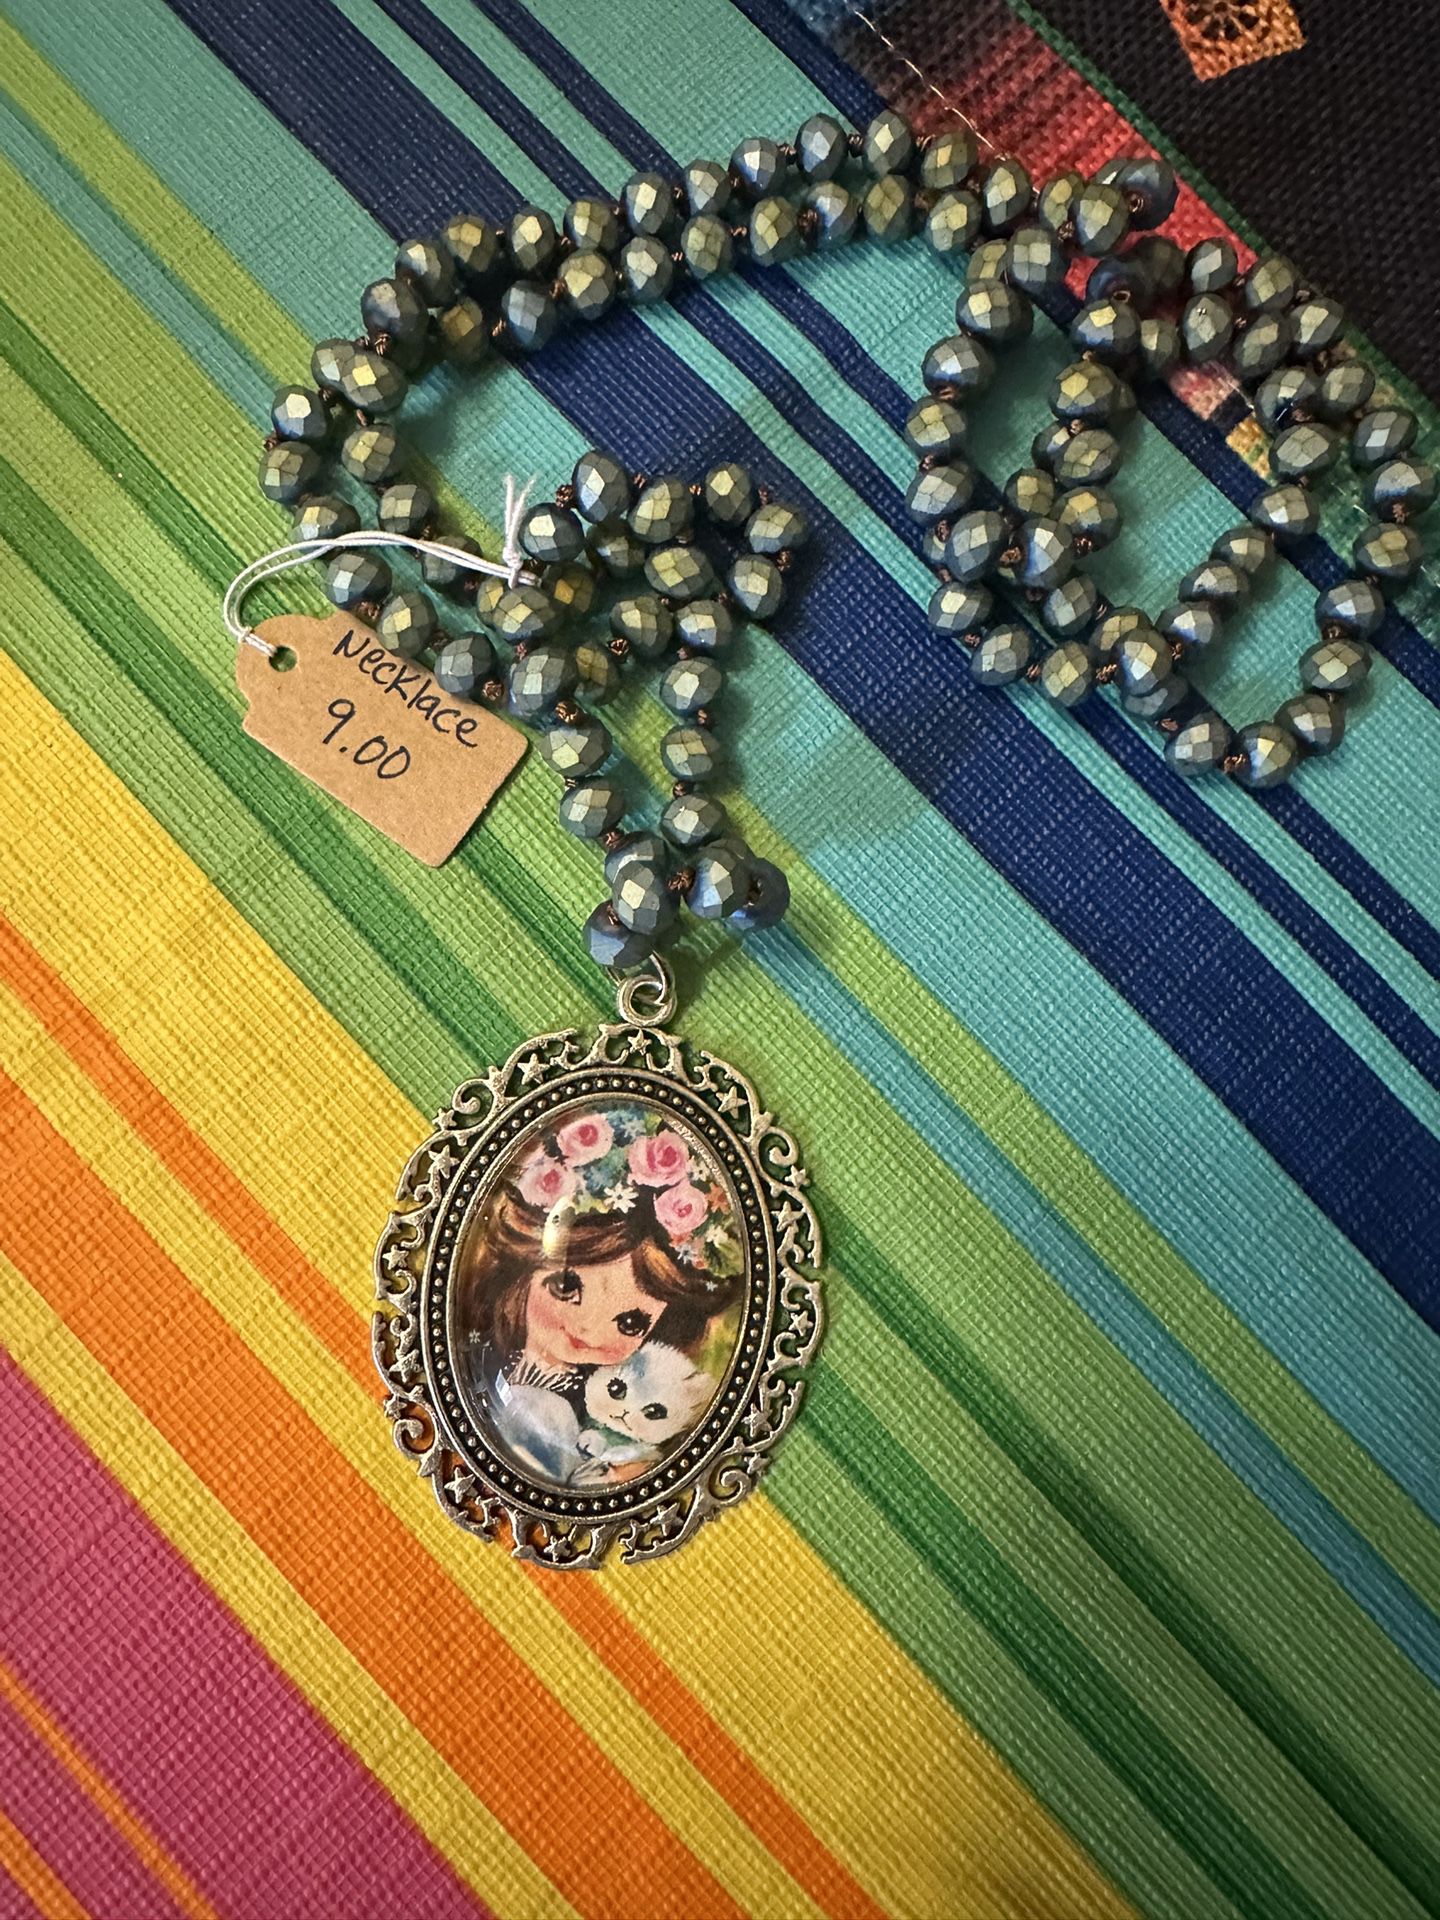 Handmade vintage necklace $10 